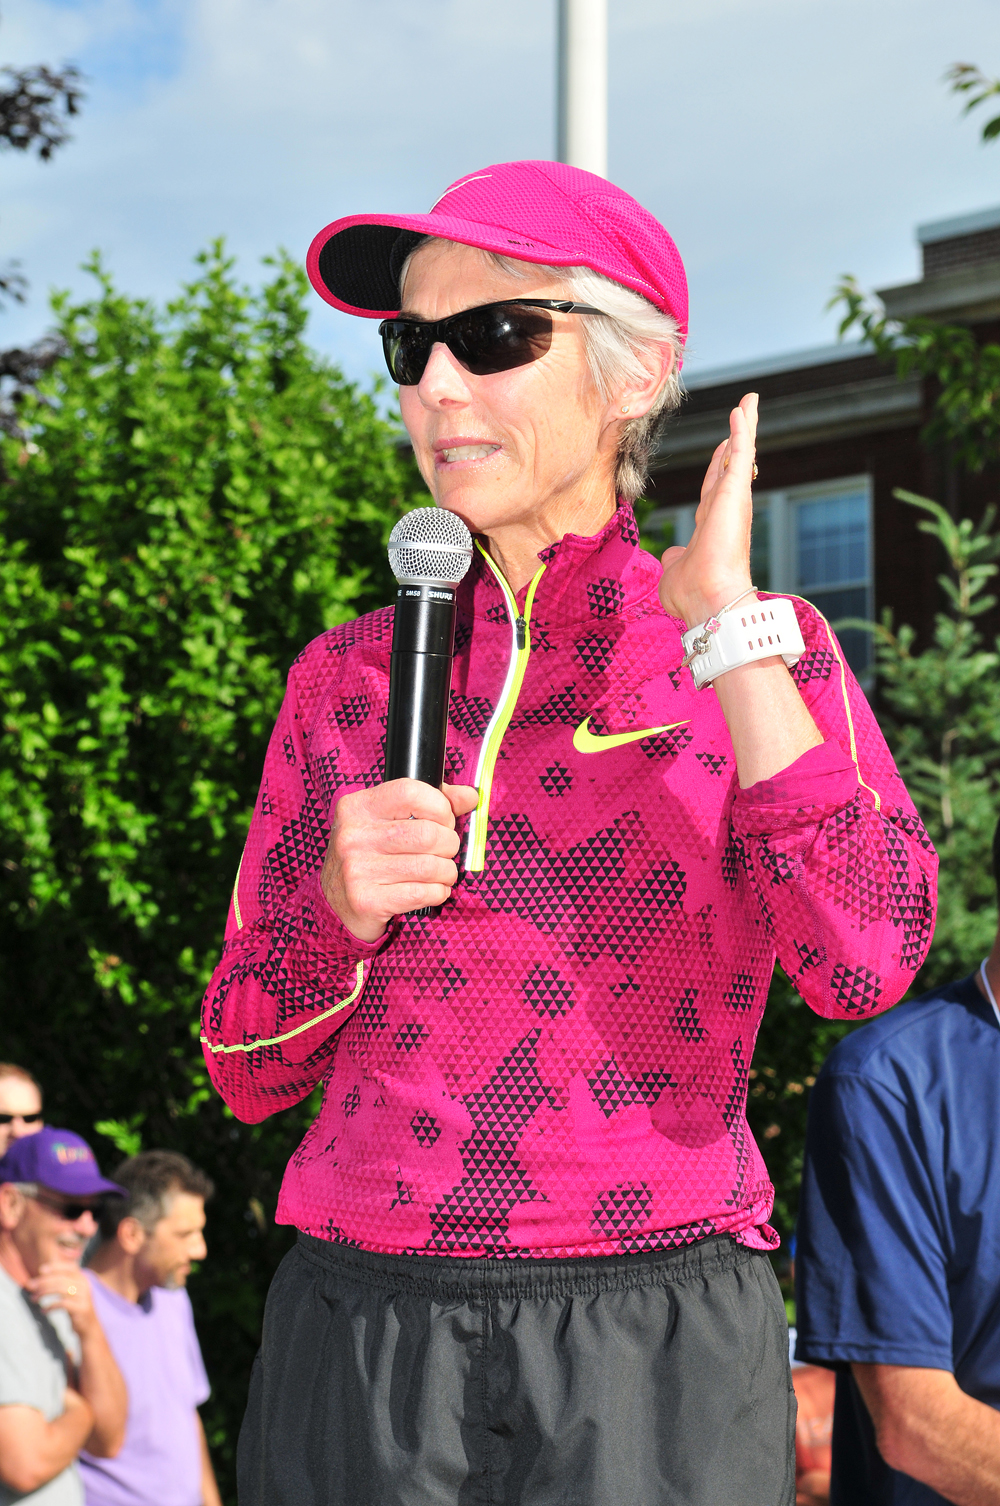 Olympic gold medal winner Joan Benoit Samuelson addresses the crowd before the start of the race. (Credit: Bill Landon)